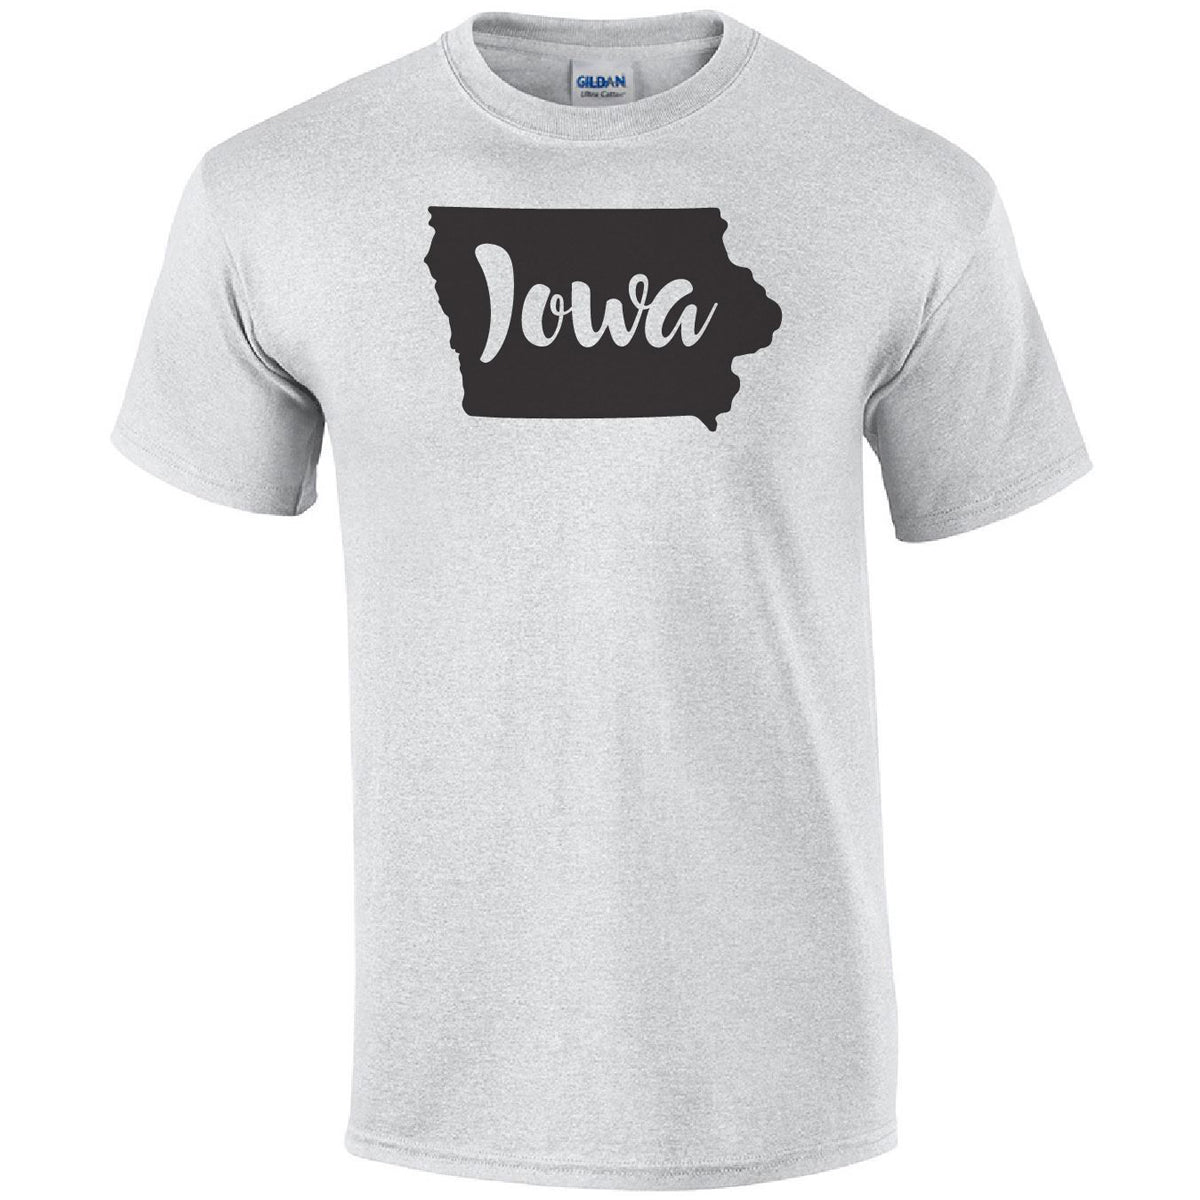 Iowa State Outline Printed Tee Humorous Shirt 411 Adult Small Ash 